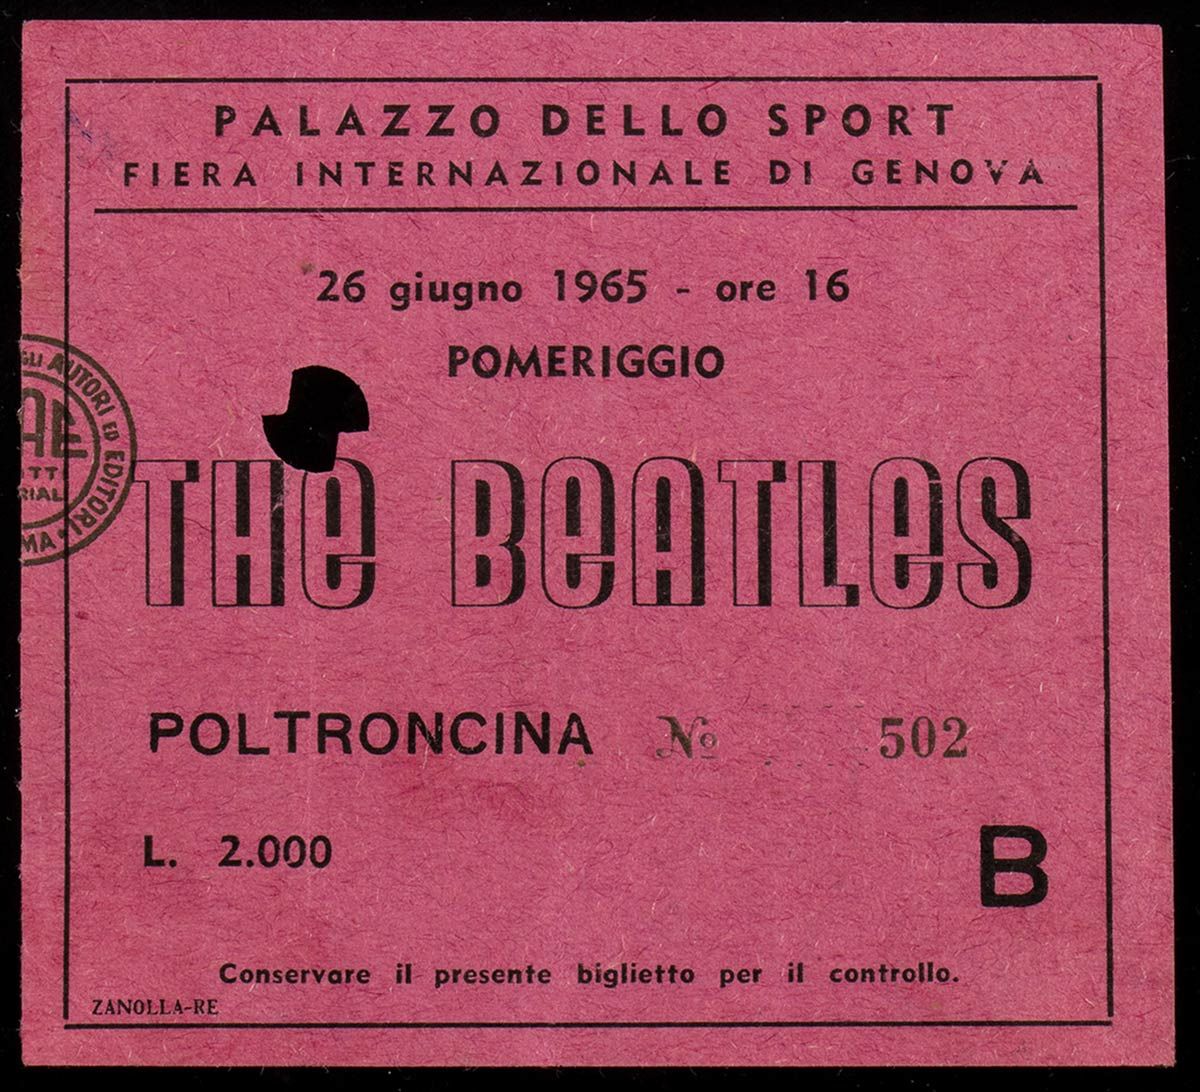 The Beatles: Genoa concert ticket, June 26, 1965 1965年6月26日在热那亚举行的BEATLES音乐会的门票。&hellip;